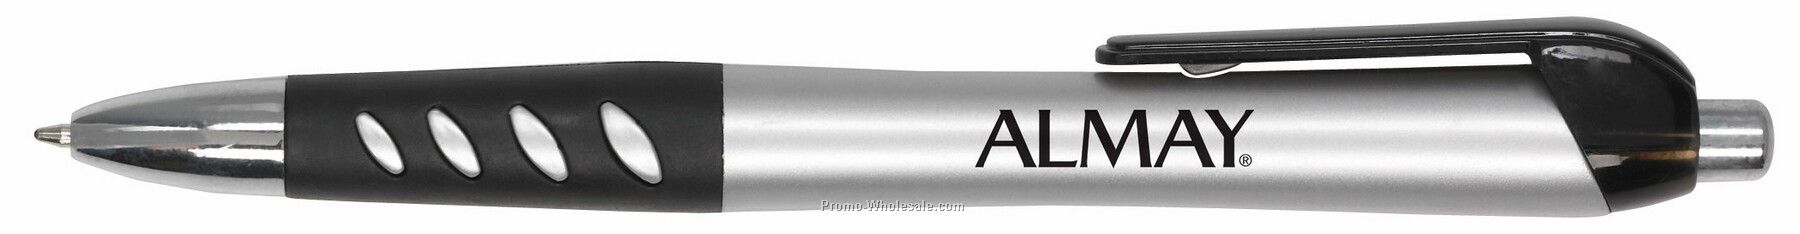 Mercury Sleek Barrel Pen With Vented Rubber Grip